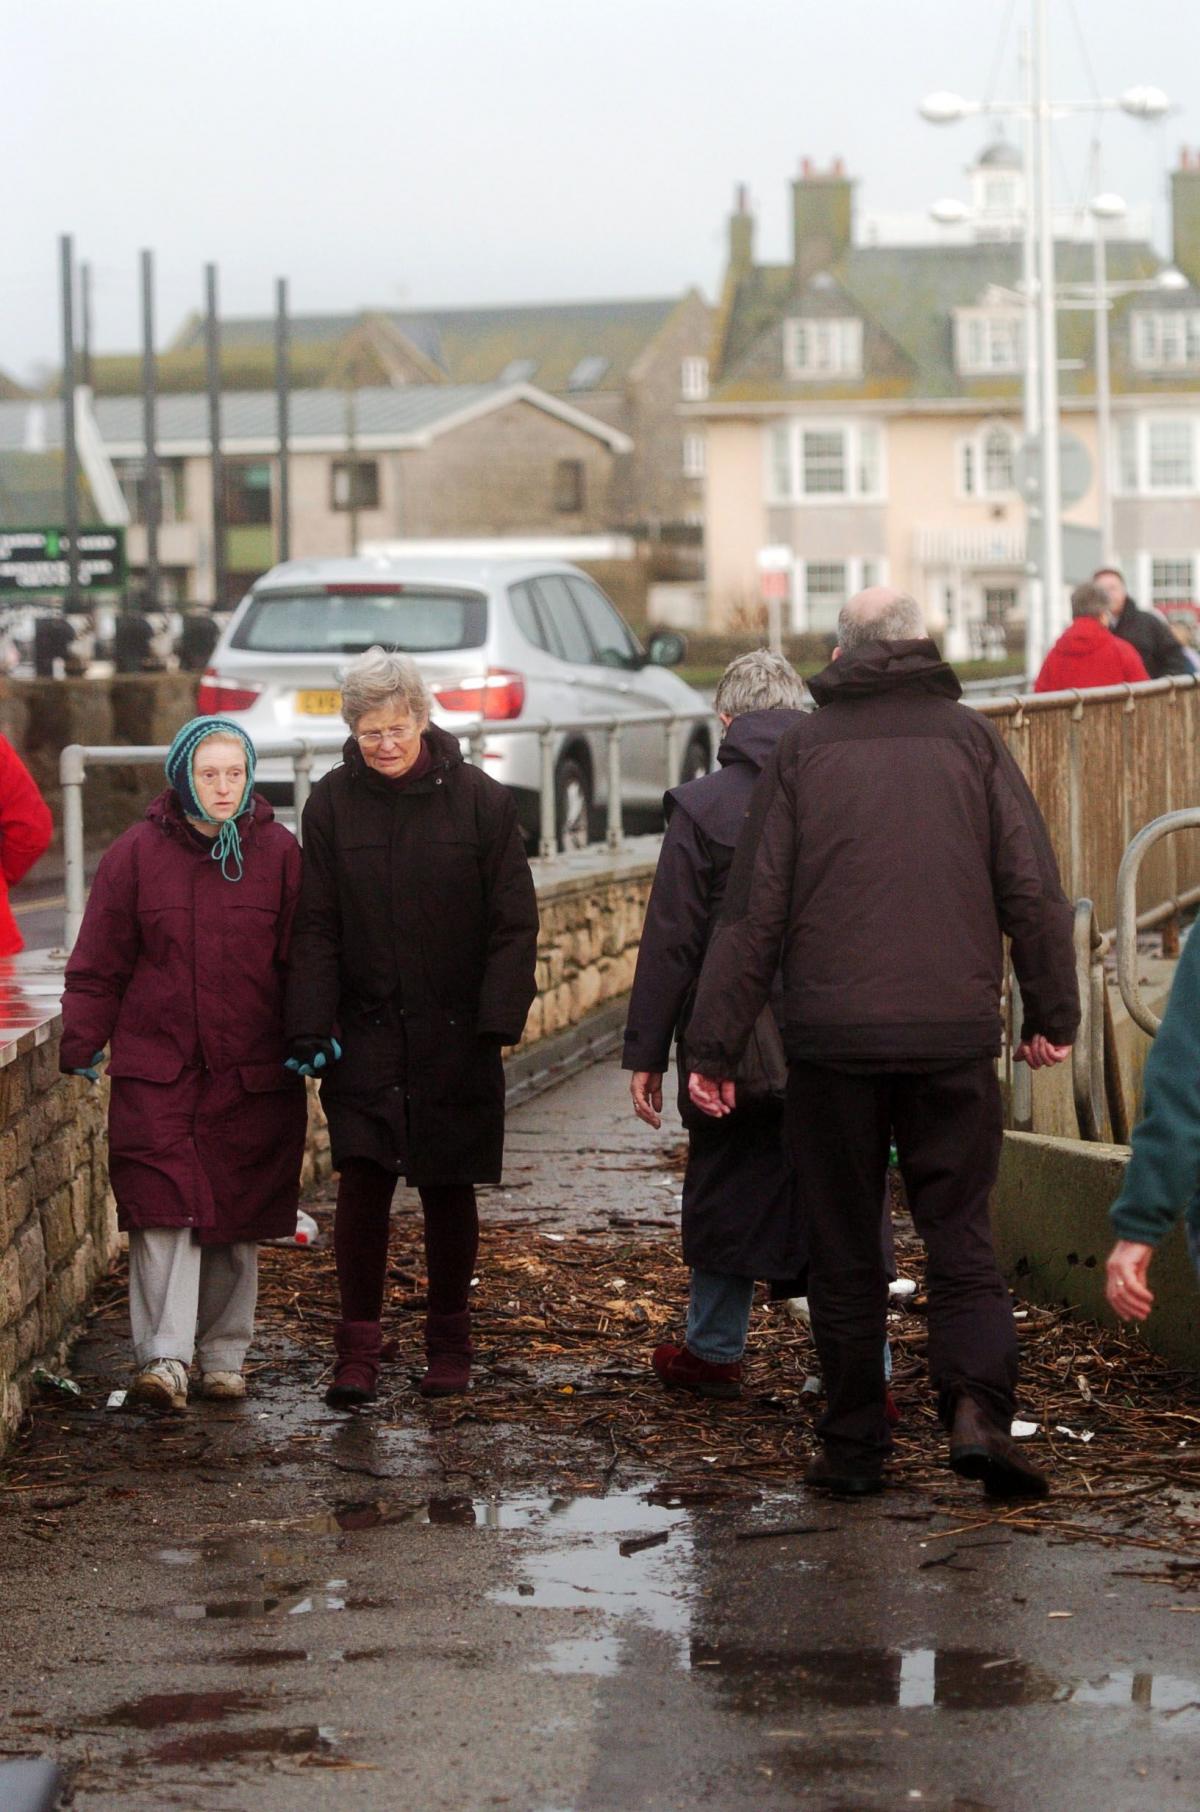 Floods have been causing chaos across Dorset